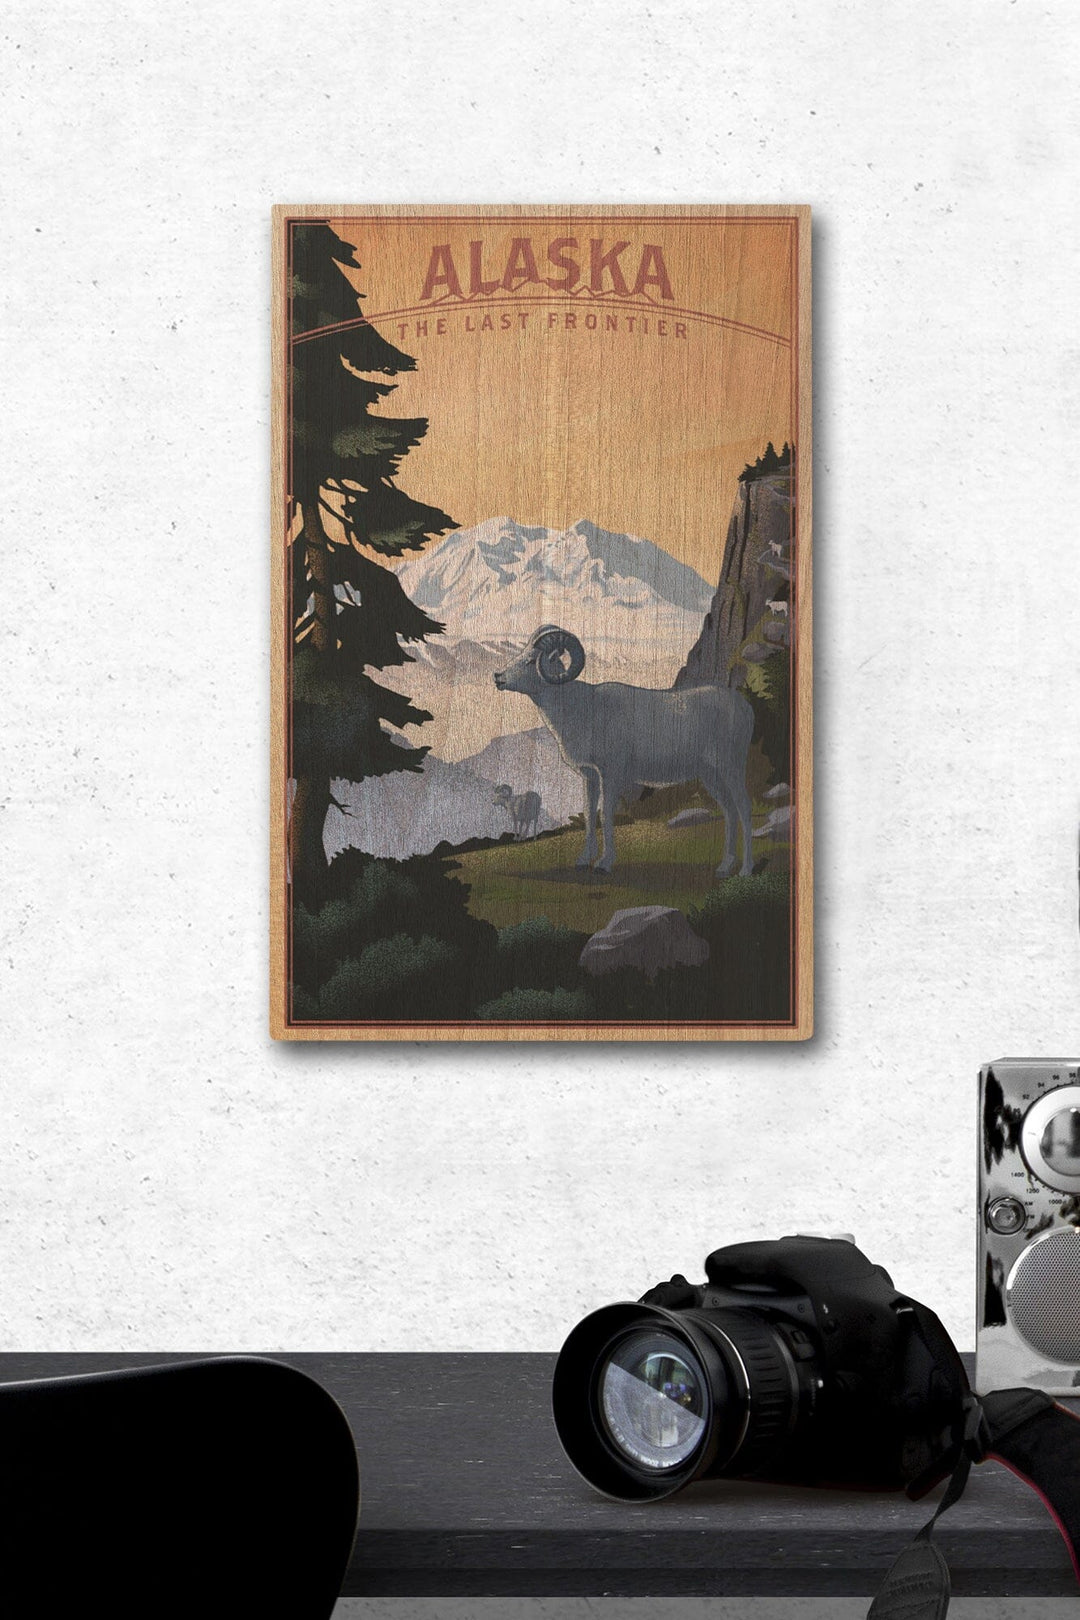 Alaska, The Last Frontier, Dall Sheep & Mountain, Lithograph, Lantern Press Artwork, Wood Signs and Postcards Wood Lantern Press 12 x 18 Wood Gallery Print 